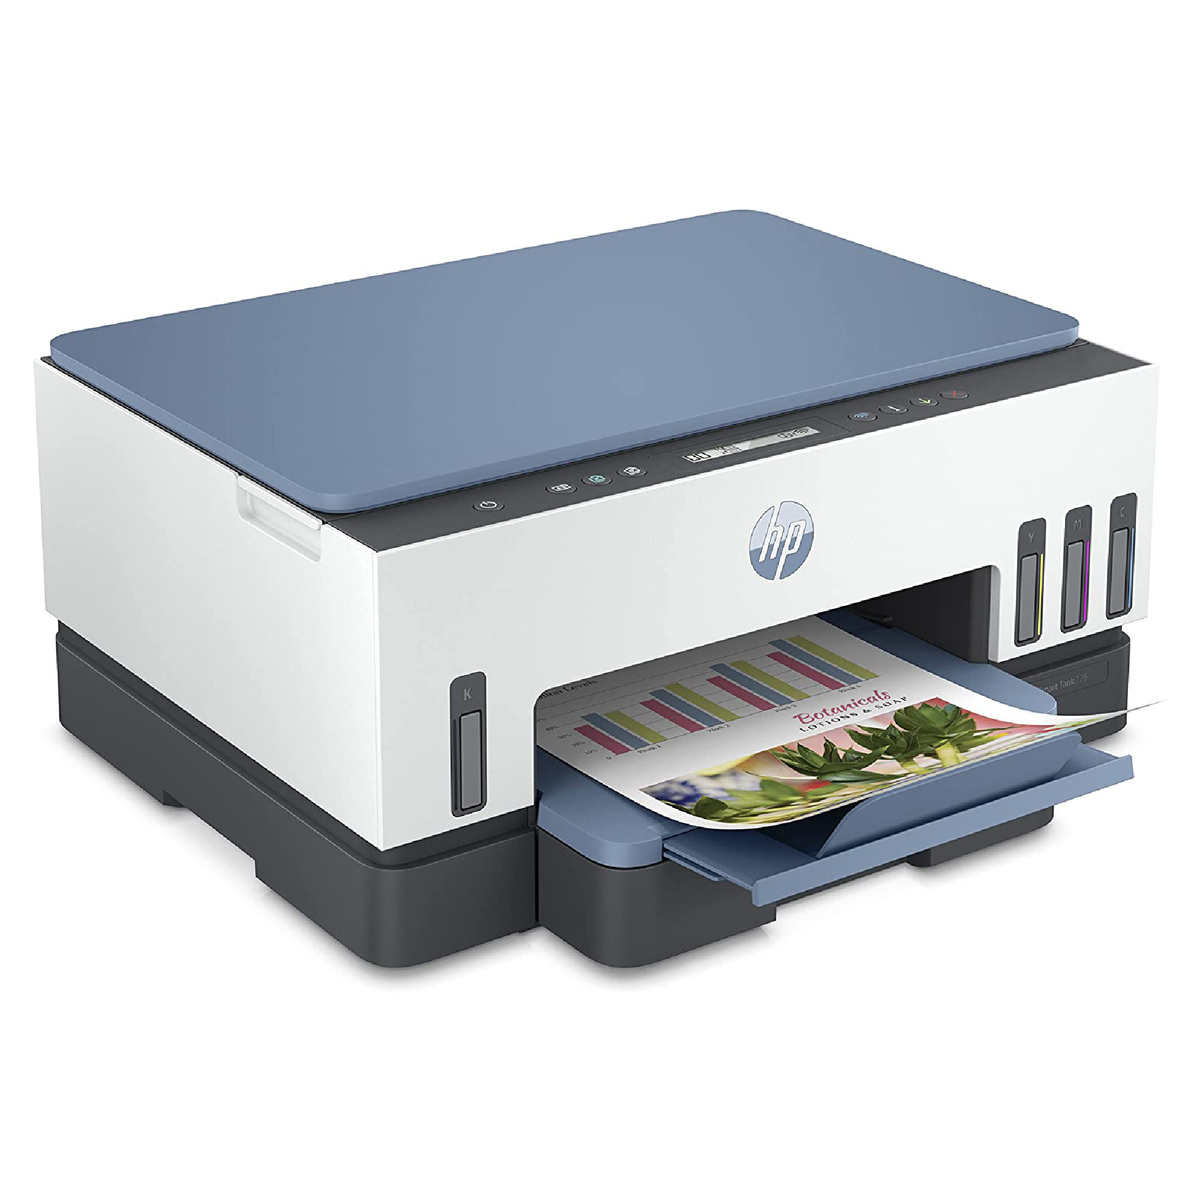 HP Smart Tank 725 All-in-One Wireless Printer (28B51A), White/Blue